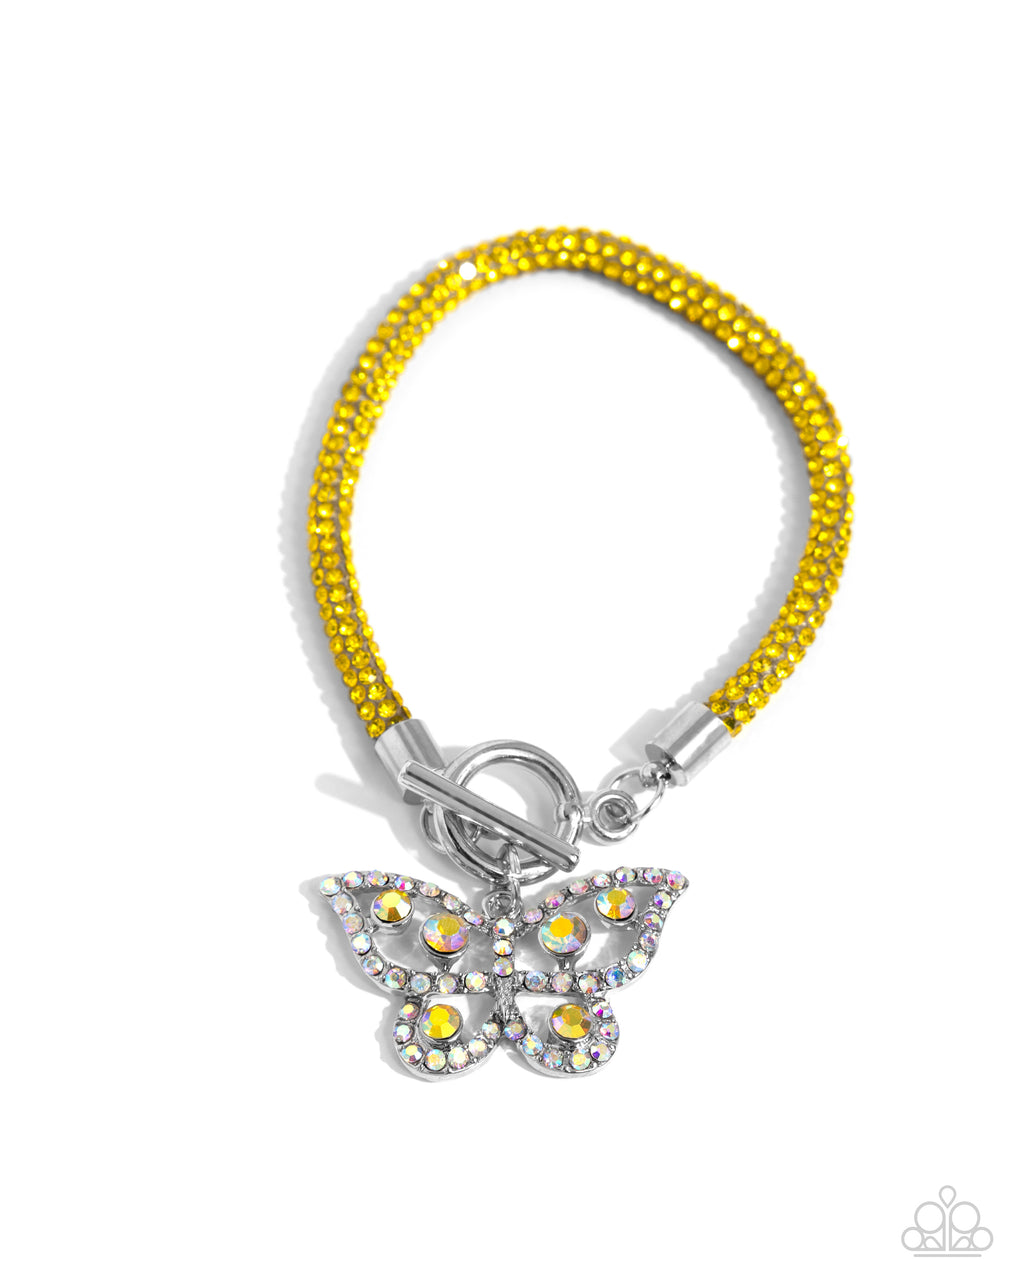 Paparazzi - Aerial Appeal - Yellow Bracelet